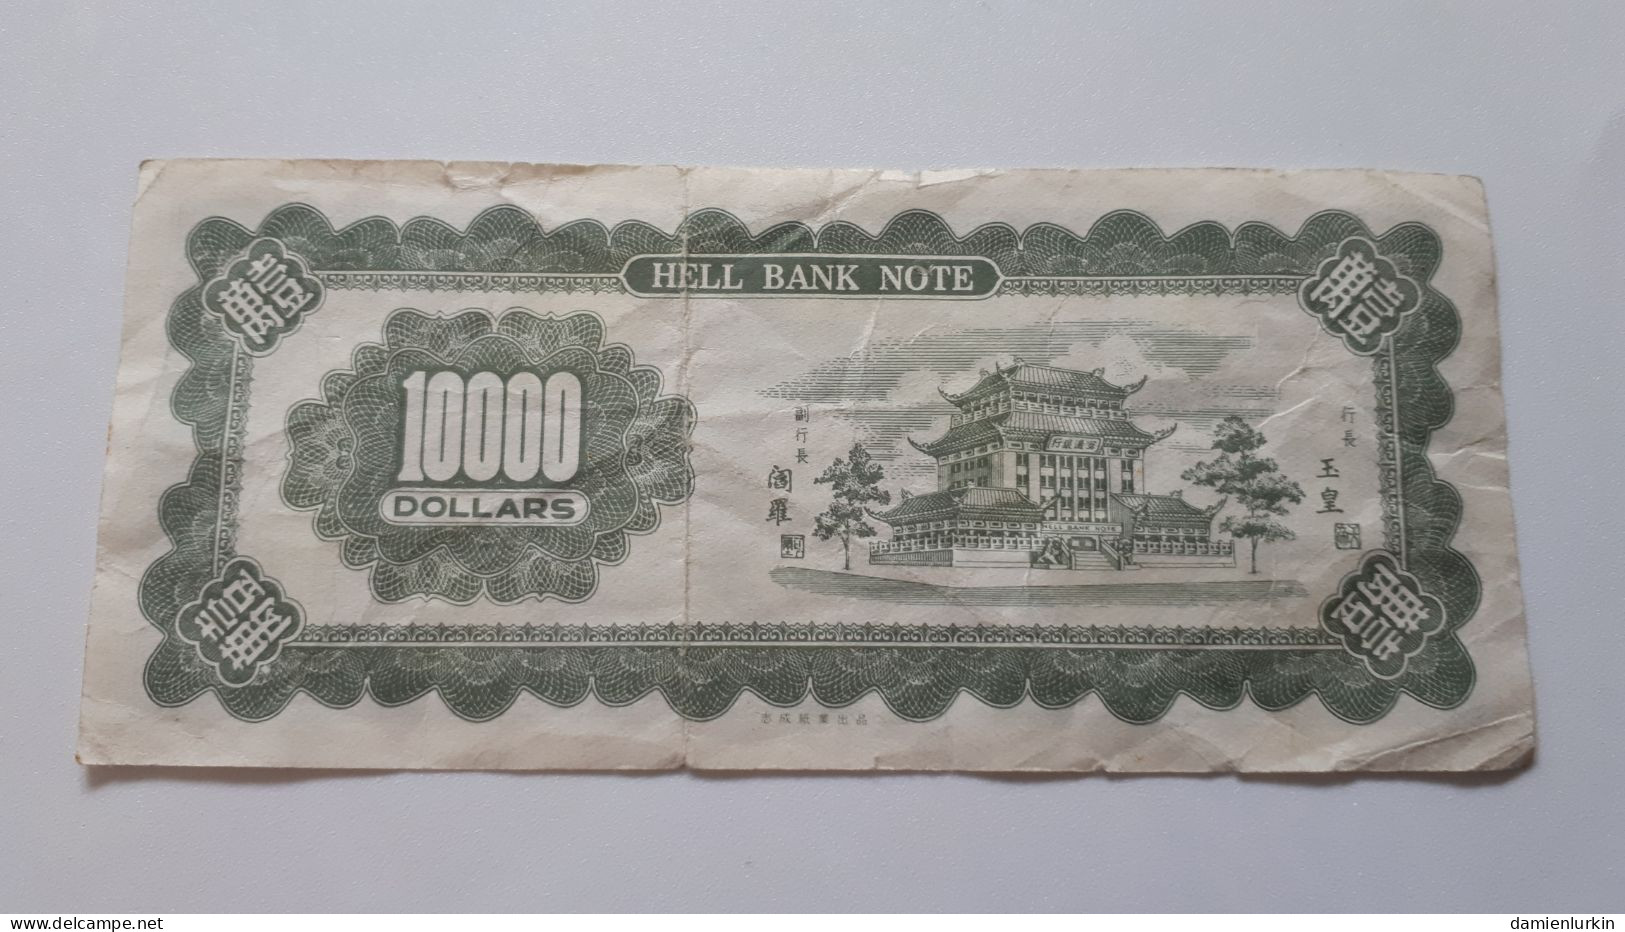 HONG KONG 100 DOLLARS HELL BANK NOTE - Specimen